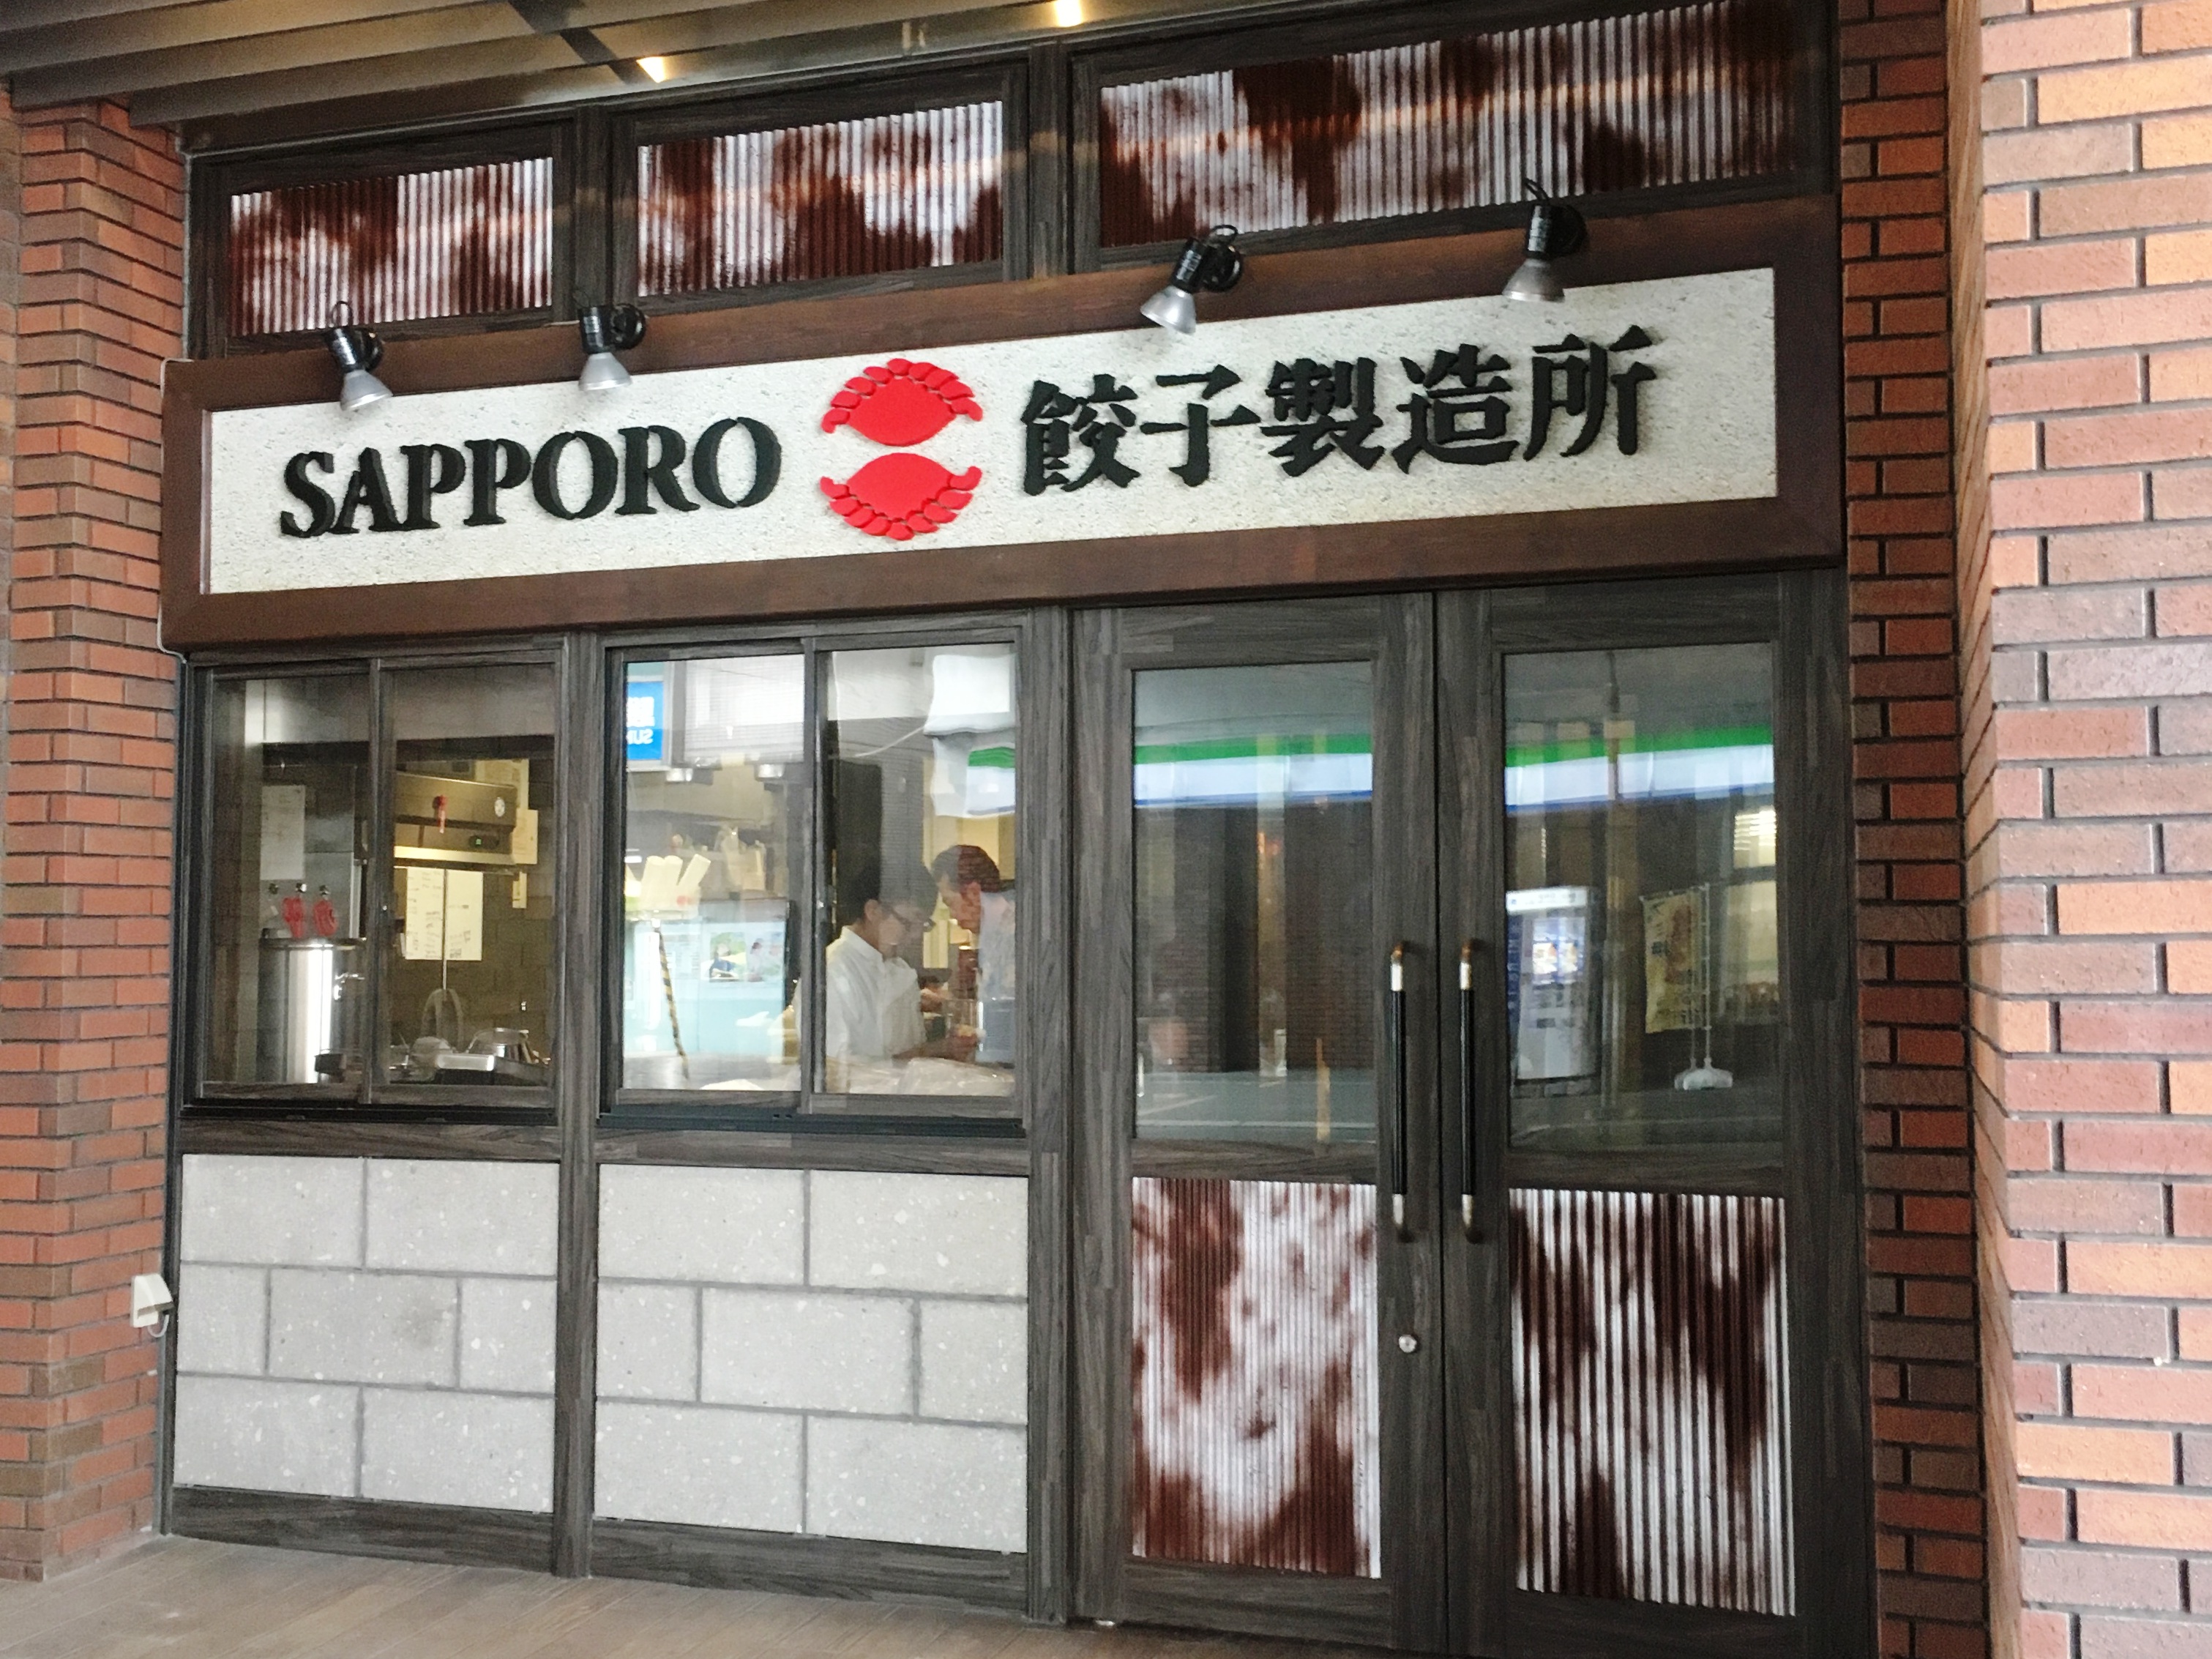 Sapporo餃子製造所サツエキbridge店 が4月10日 火 札幌市内にオープン 北海道産小麦 北海道産キャベツを使用したジューシーな餃子 が自慢 イートアンドhdのプレスリリース